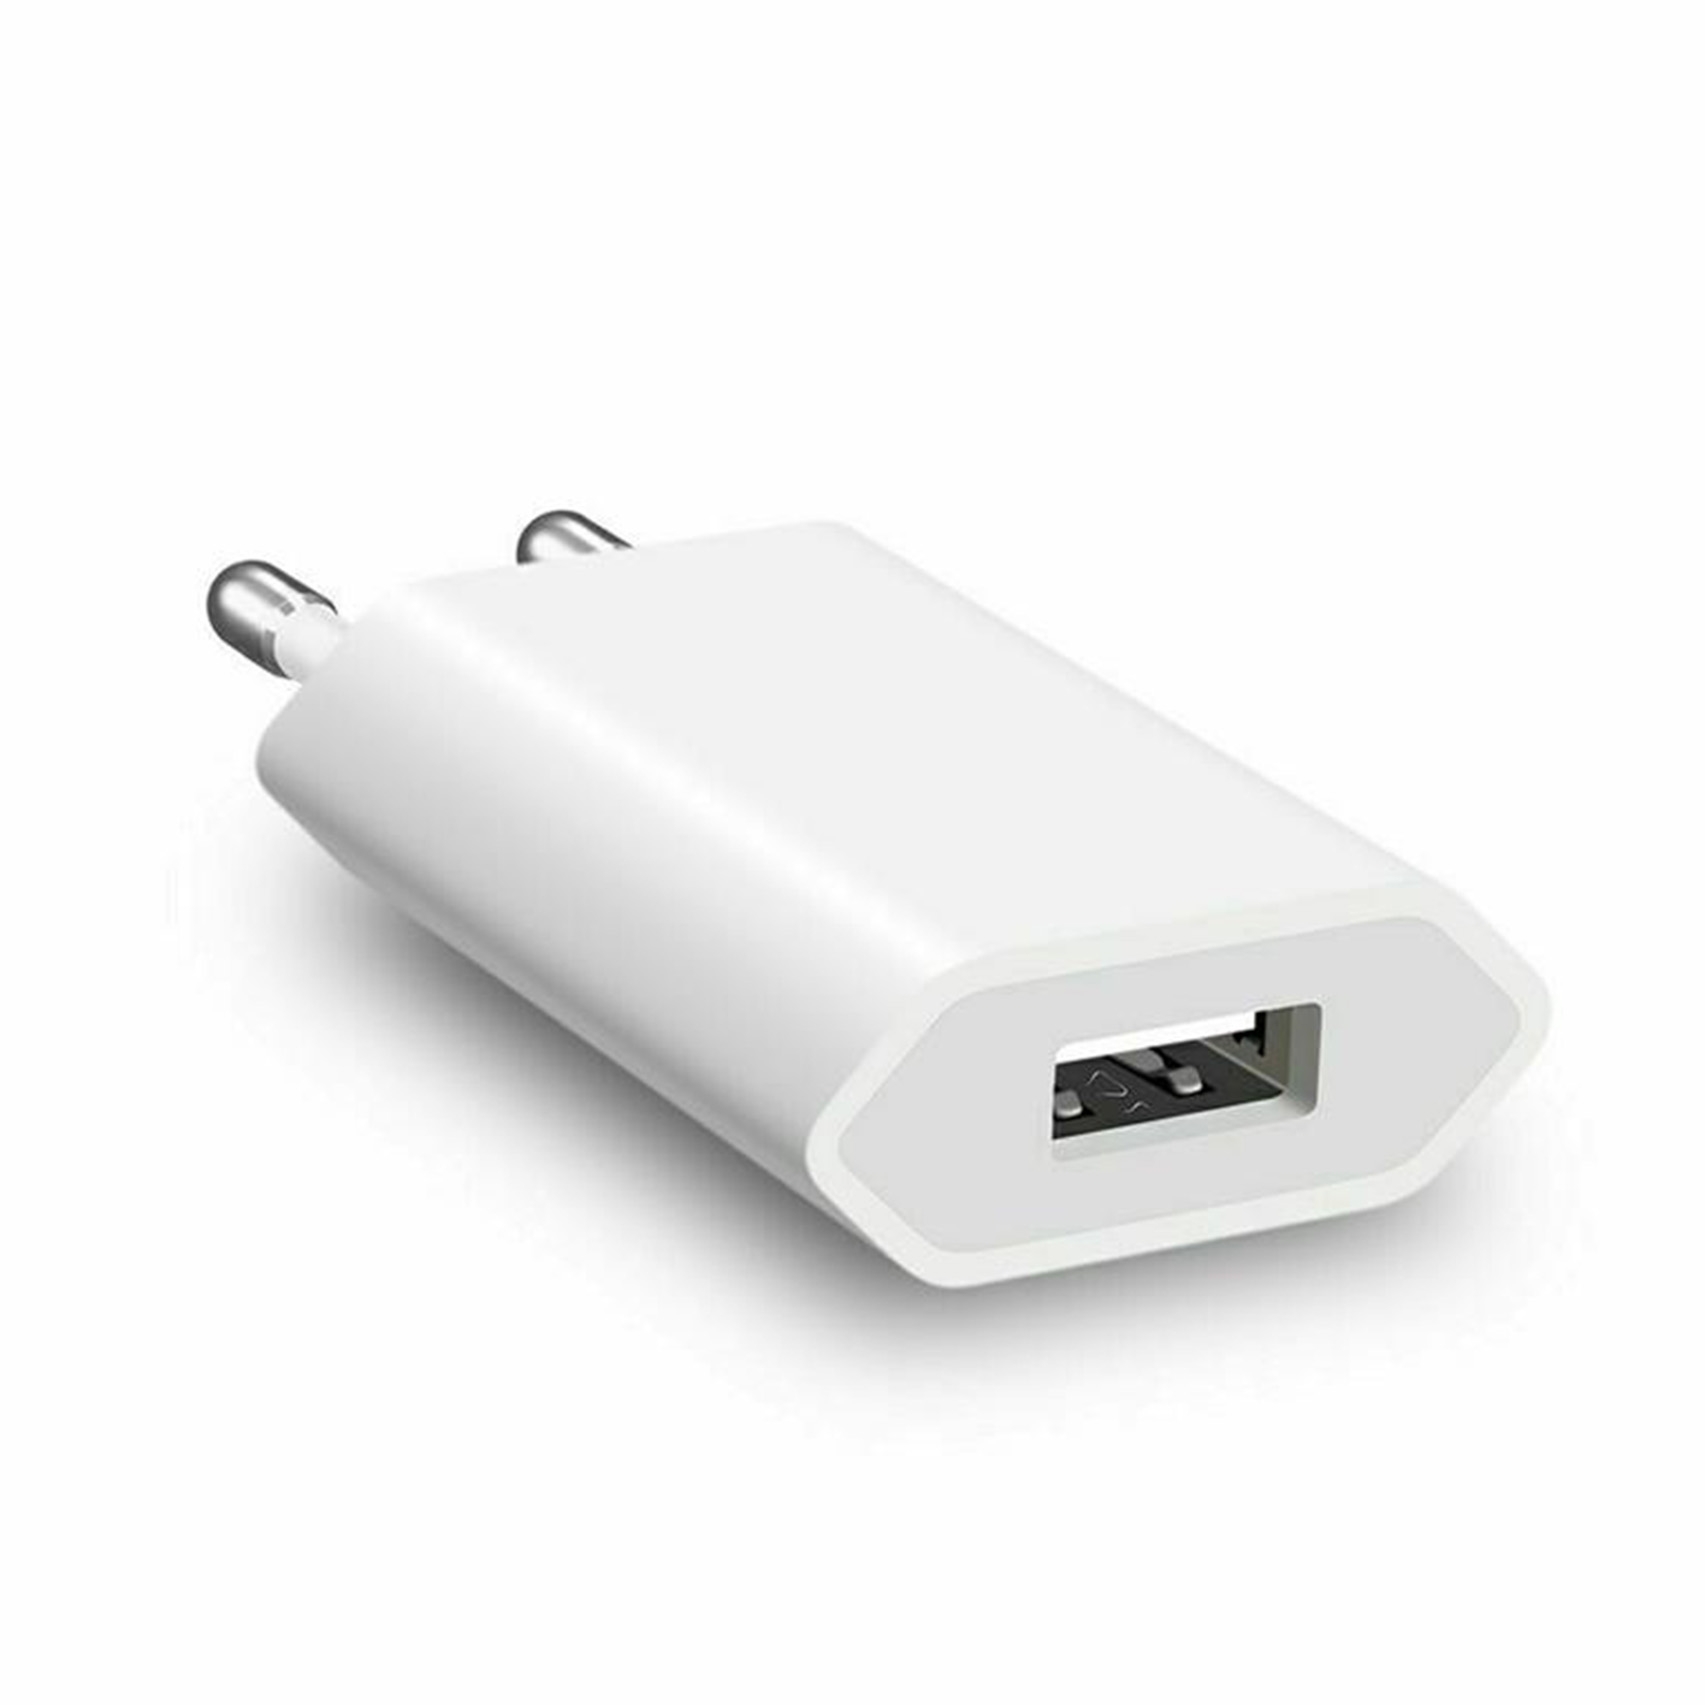 iPhone 6 5W USB Power Adapter